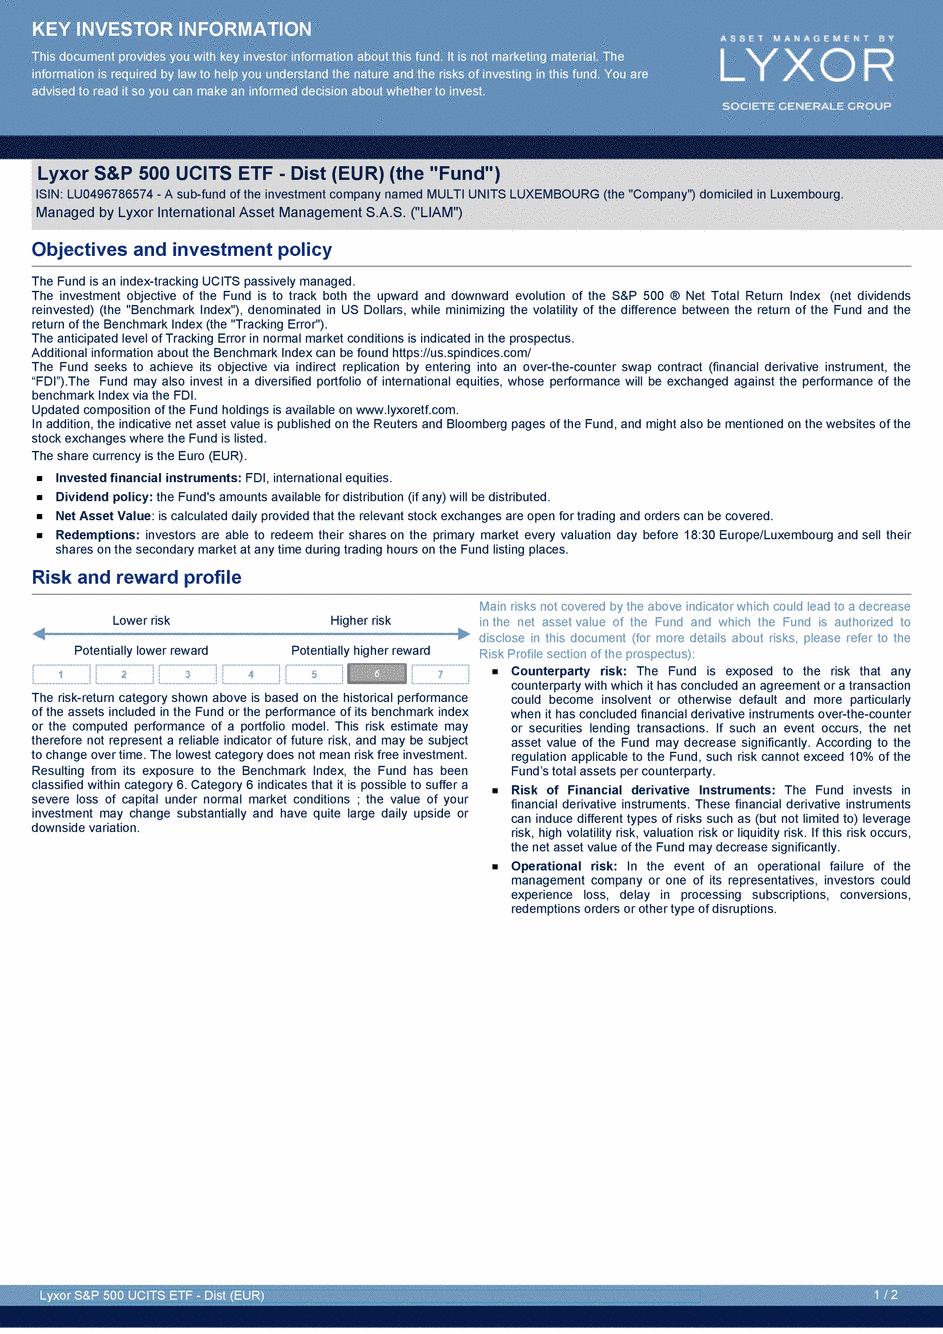 DICI Lyxor S&P 500 UCITS ETF - Dist (EUR) - 19/02/2021 - Anglais